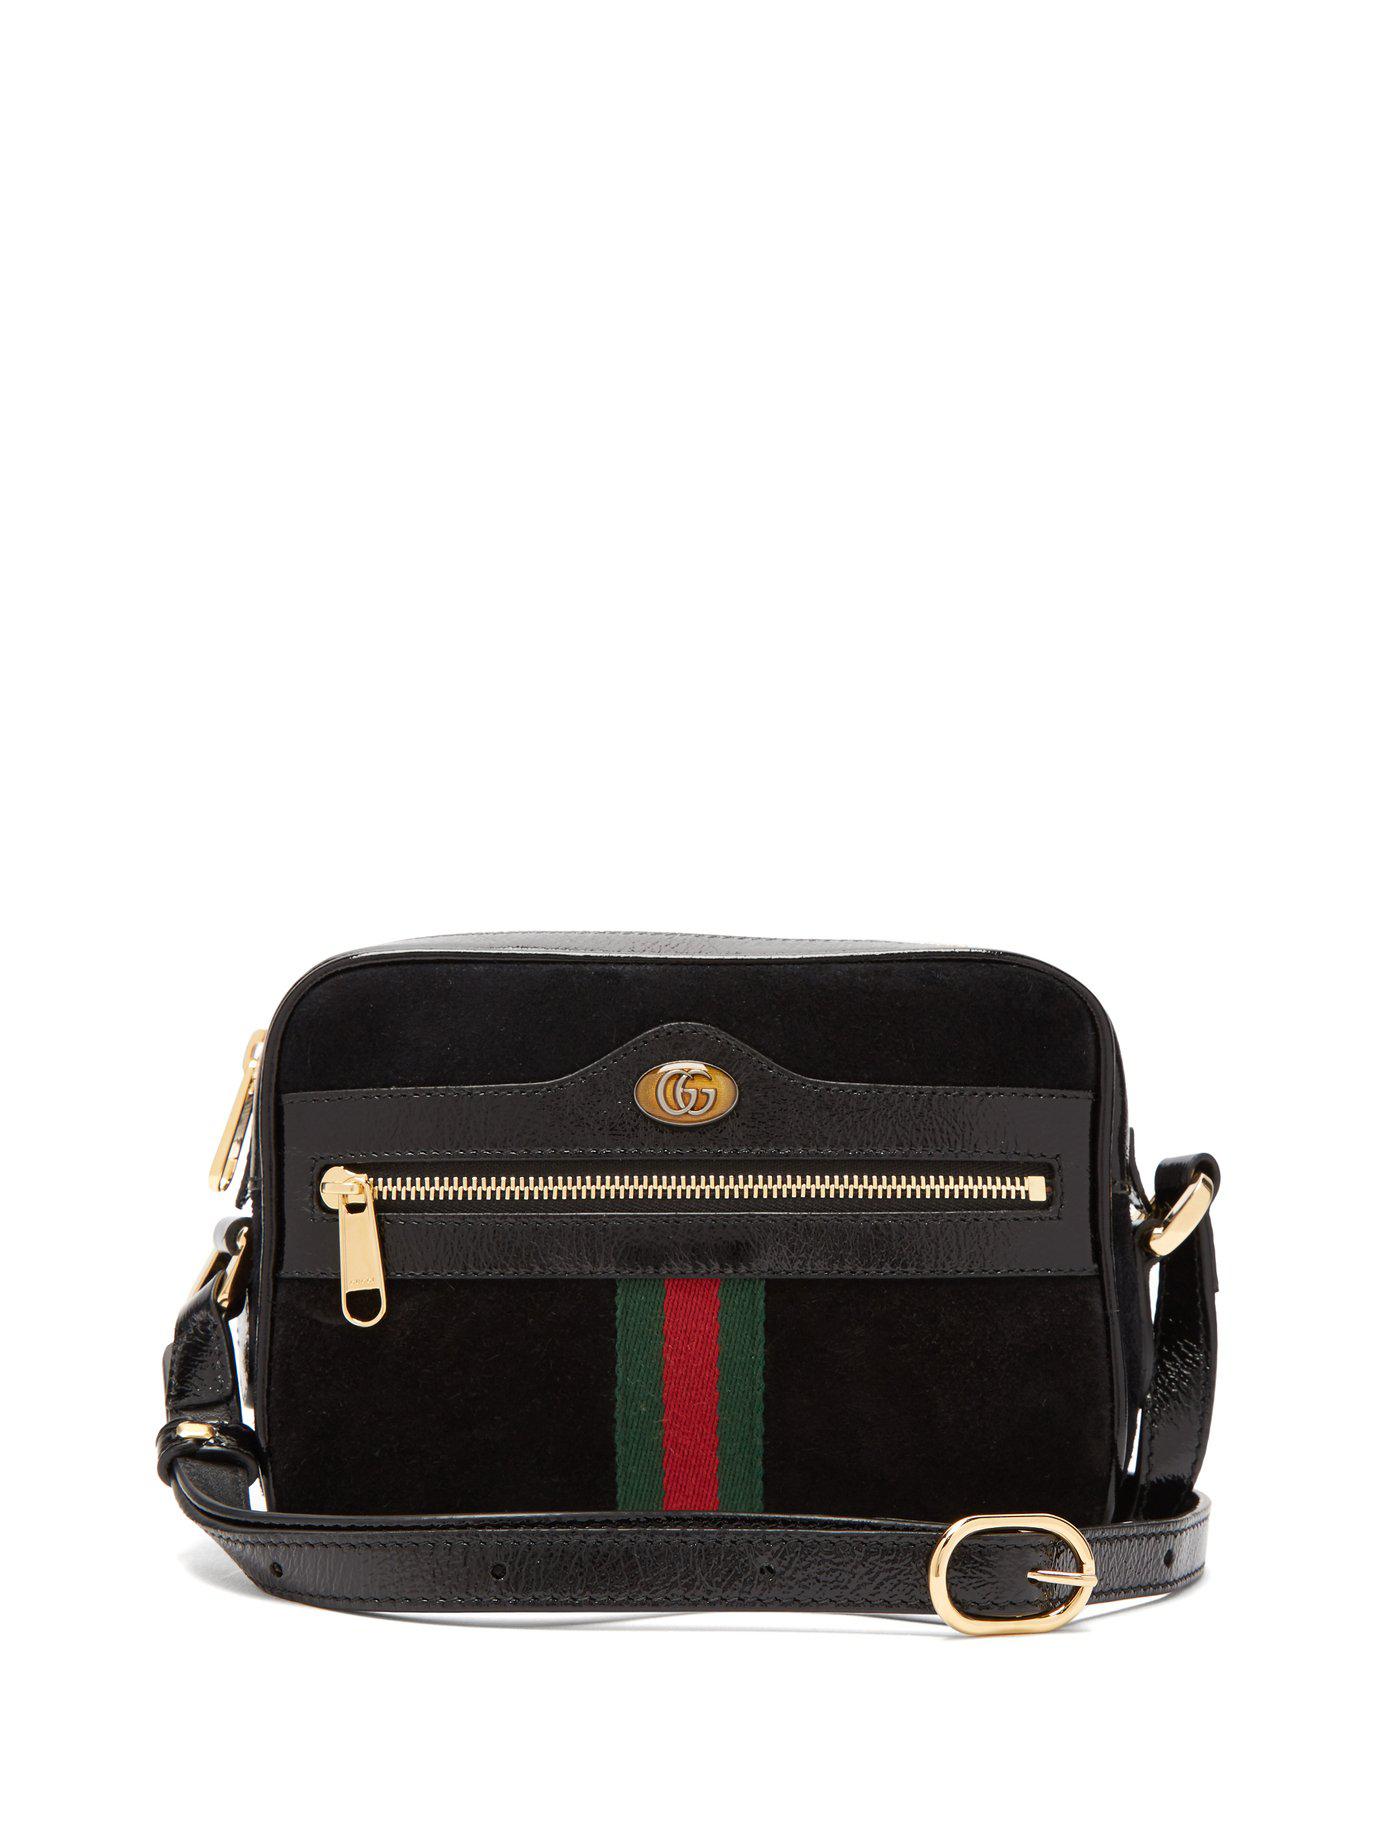 Reservere design støn Gucci Ophidia Black Suede Cross Body Mini Bag - Lyst